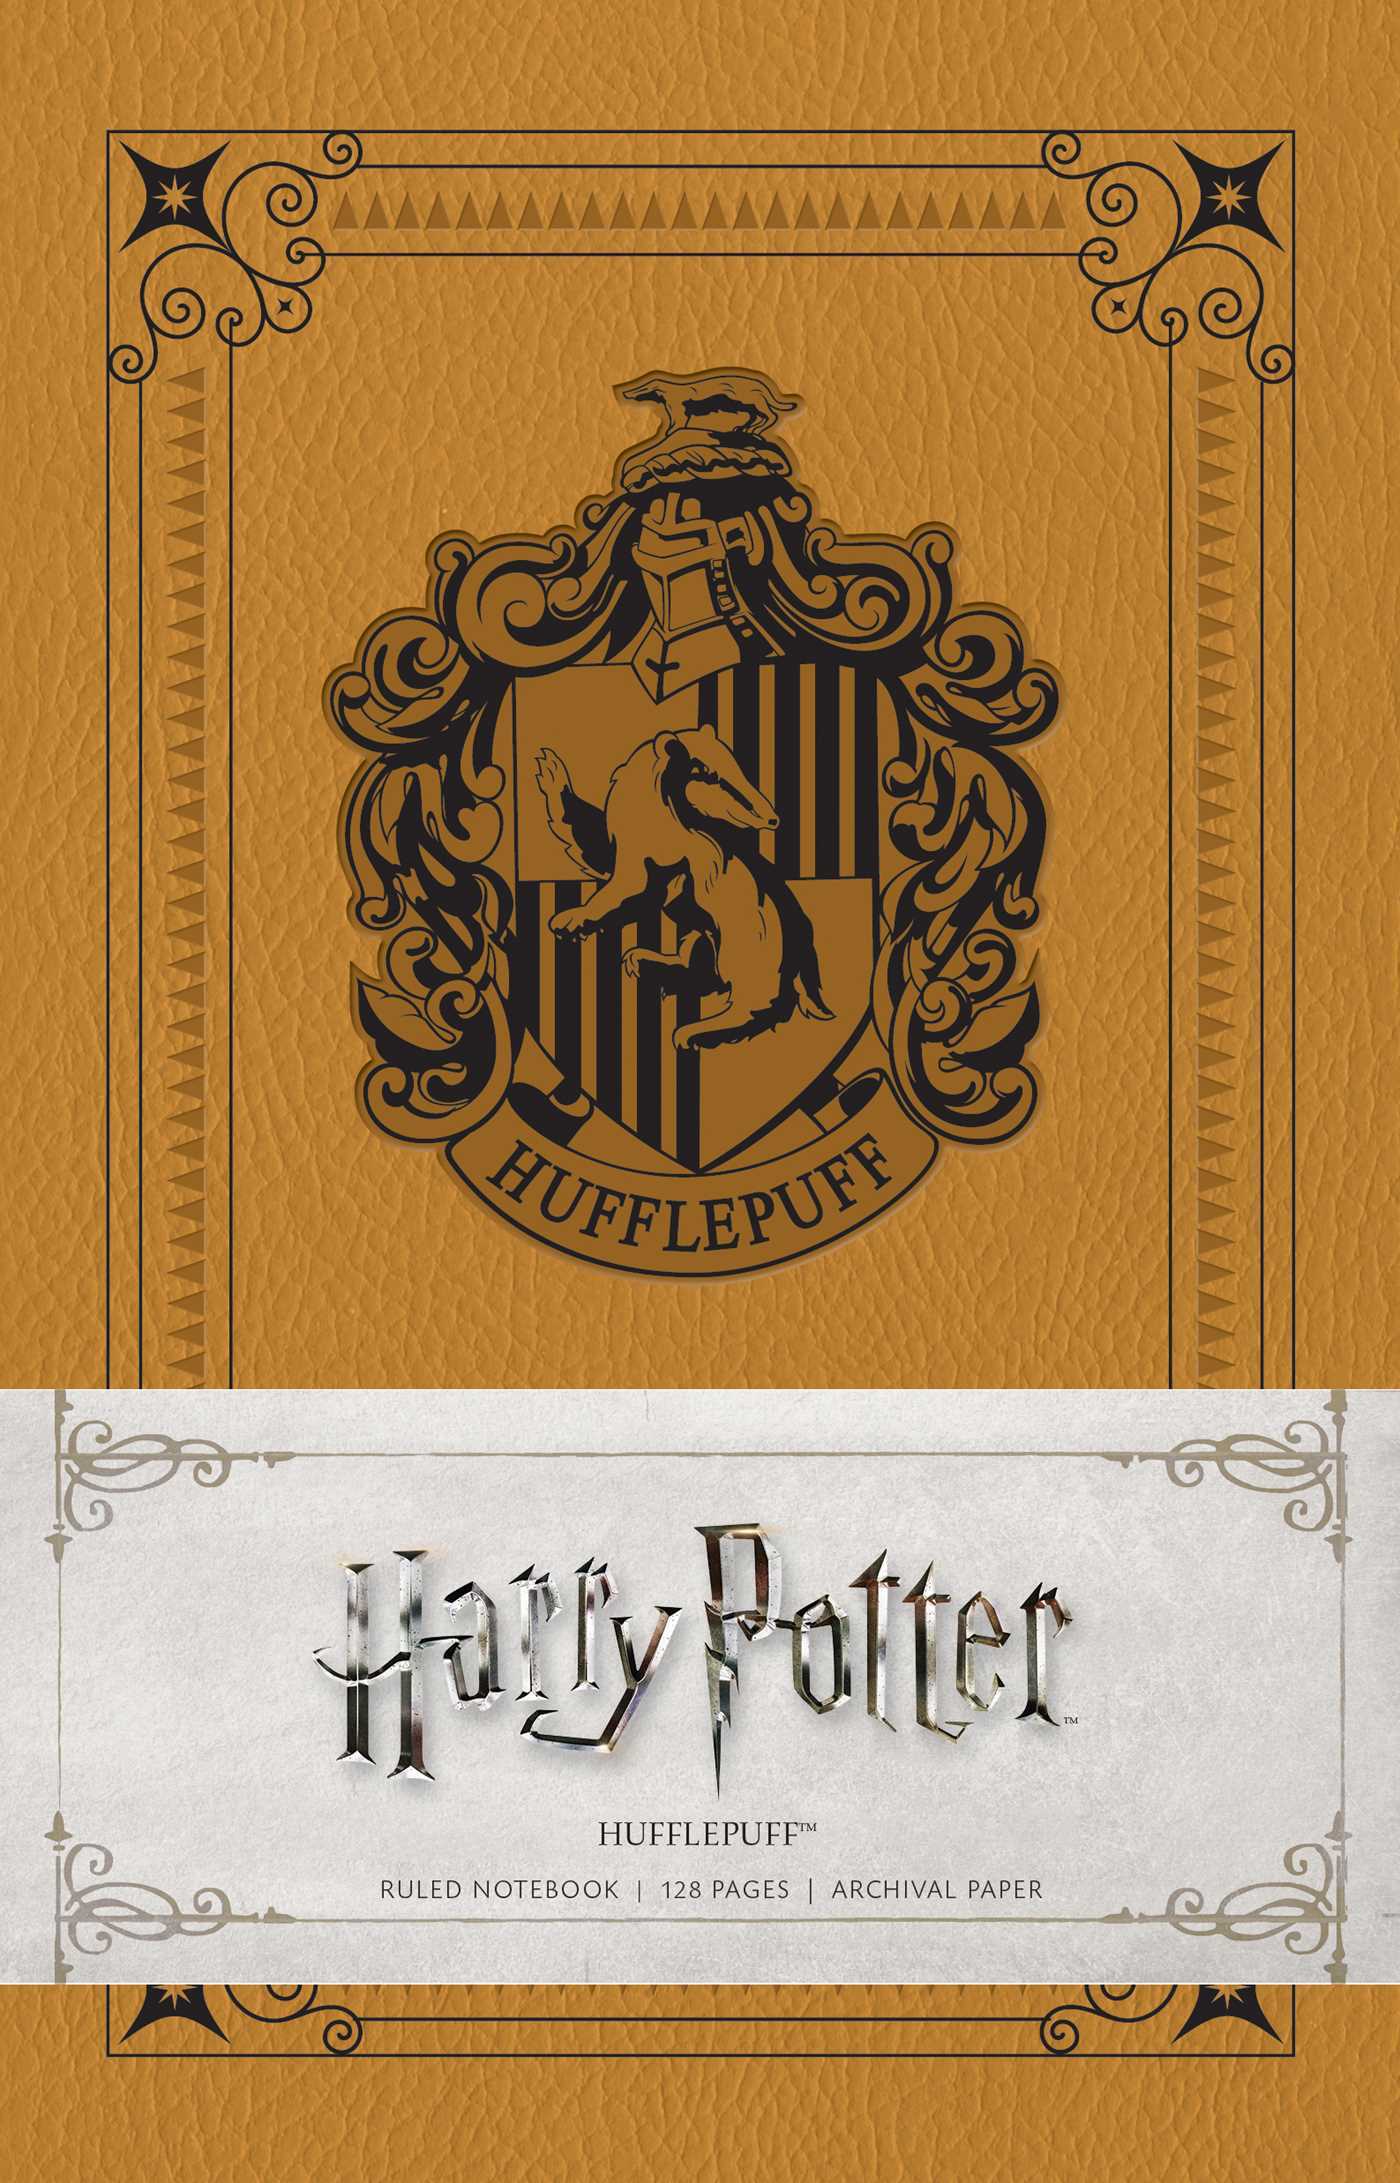 Harry Potter Hufflepuff Ruled Notebook Trade Paperback